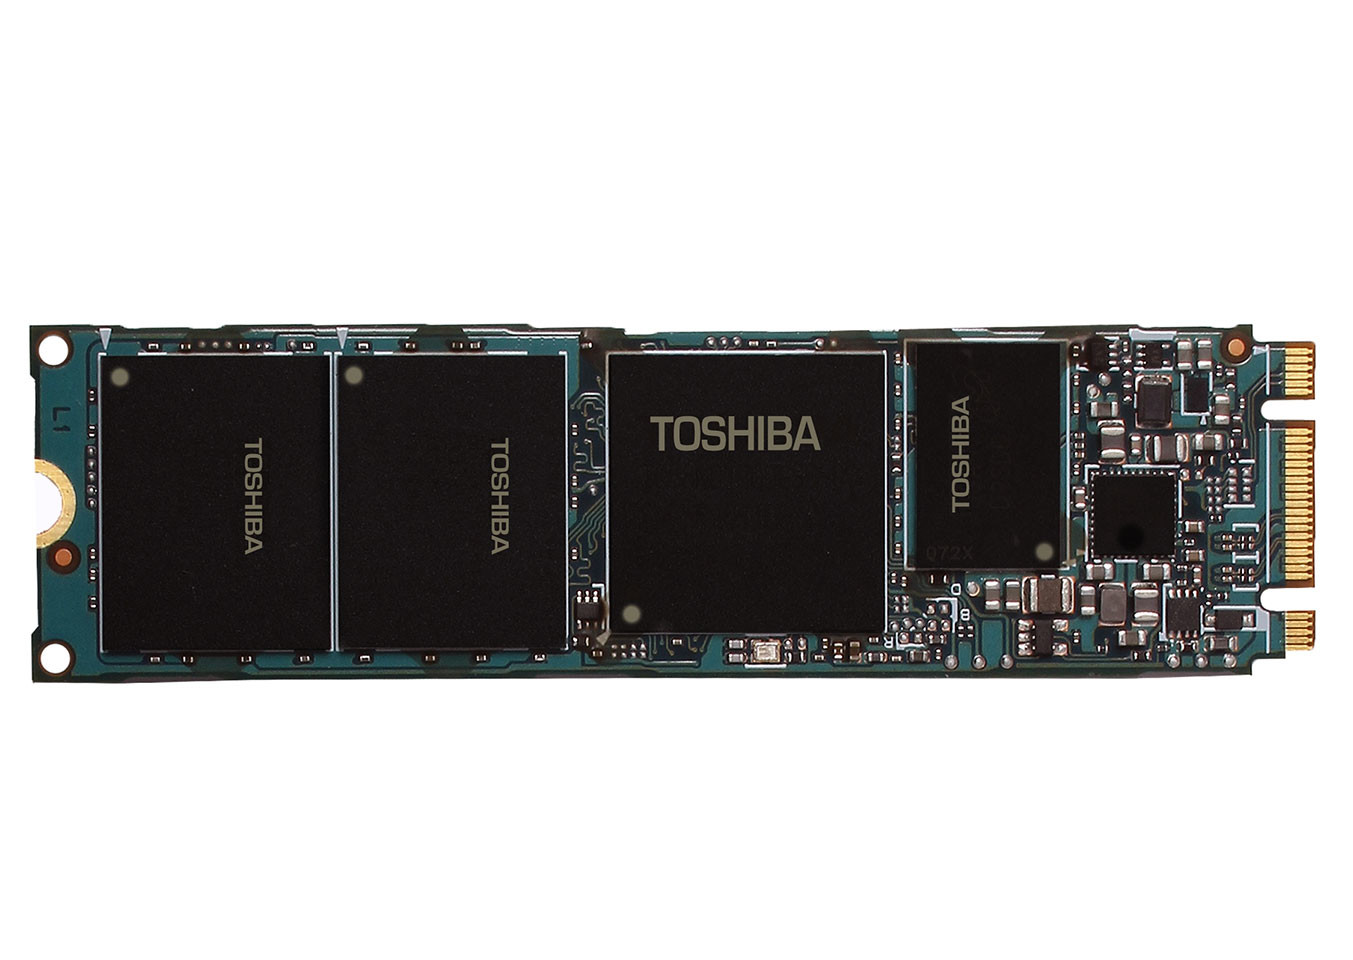 Media asset in full size related to 3dfxzone.it news item entitled as follows: Toshiba lancia SG5, i primi SSD consumer con memoria NAND TLC a 15nm | Image Name: news23815_SSD-Toshiba-SG5_1.jpg